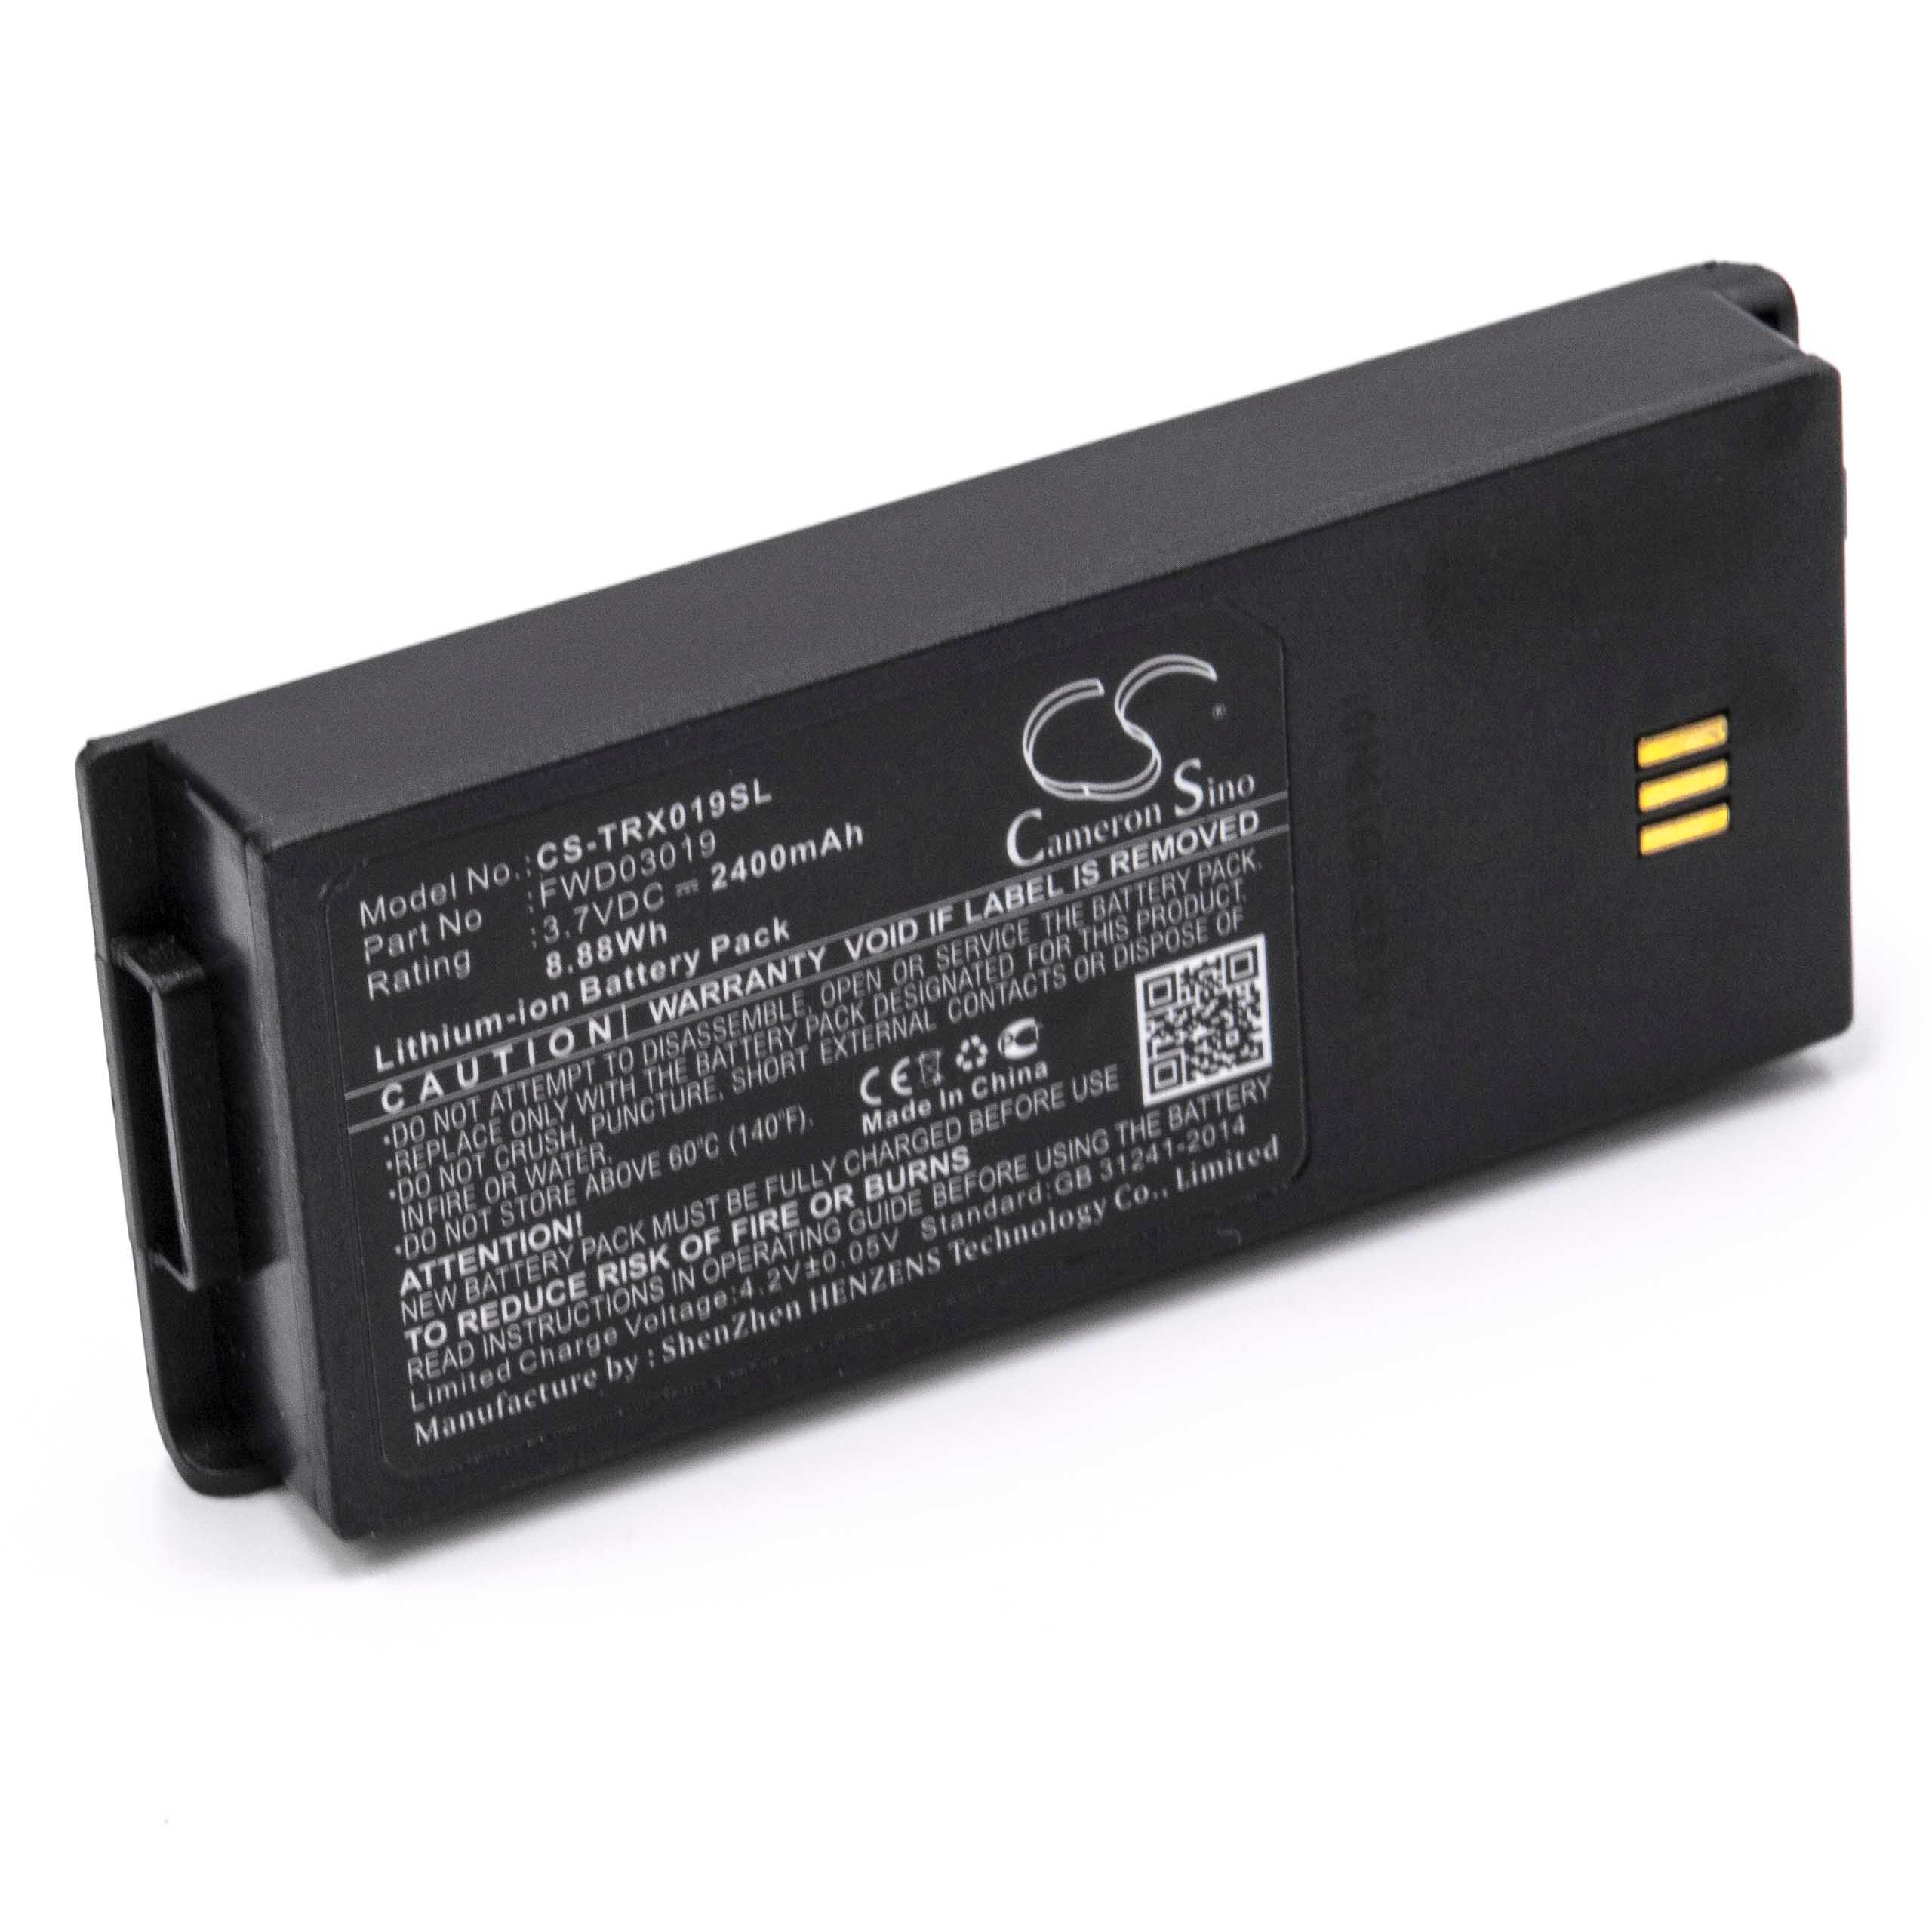 Batería reemplaza Thuraya FWD03019, FWD02223 para móvil, satélite teléfono Thuraya - 2400 mAh 3,7 V Li-Ion